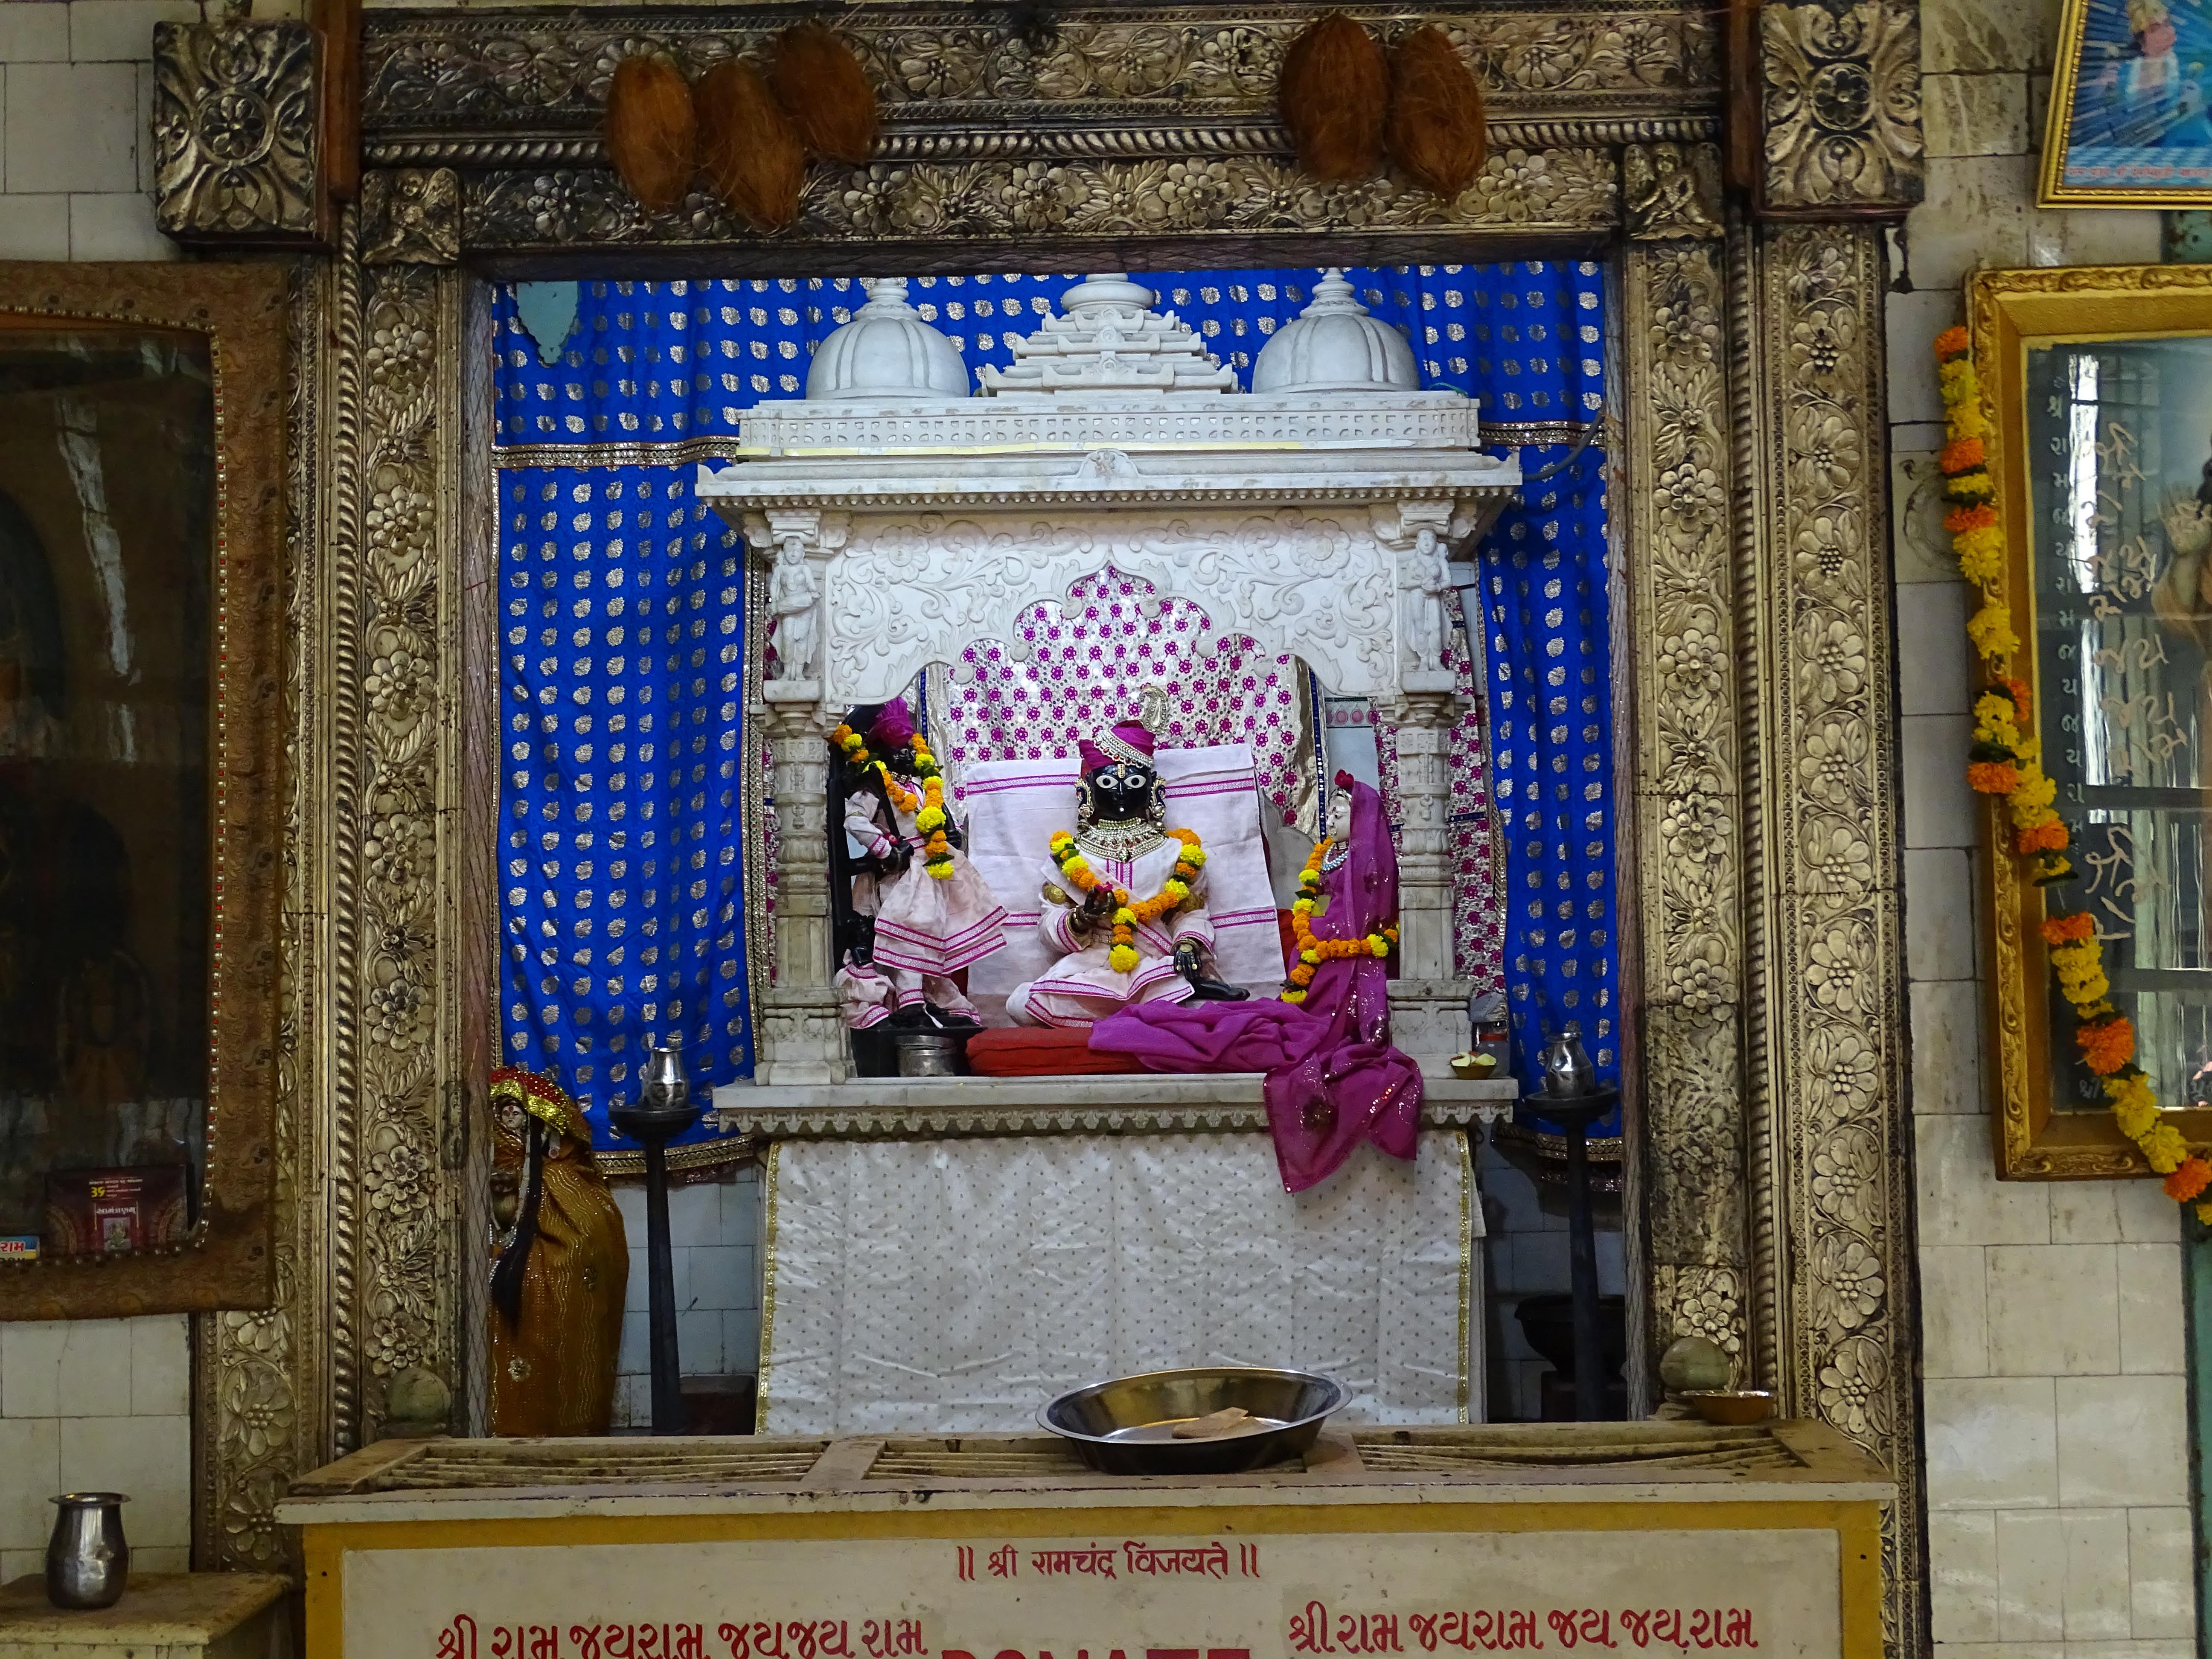 A small shrine (Vishnu) in a neighborhood